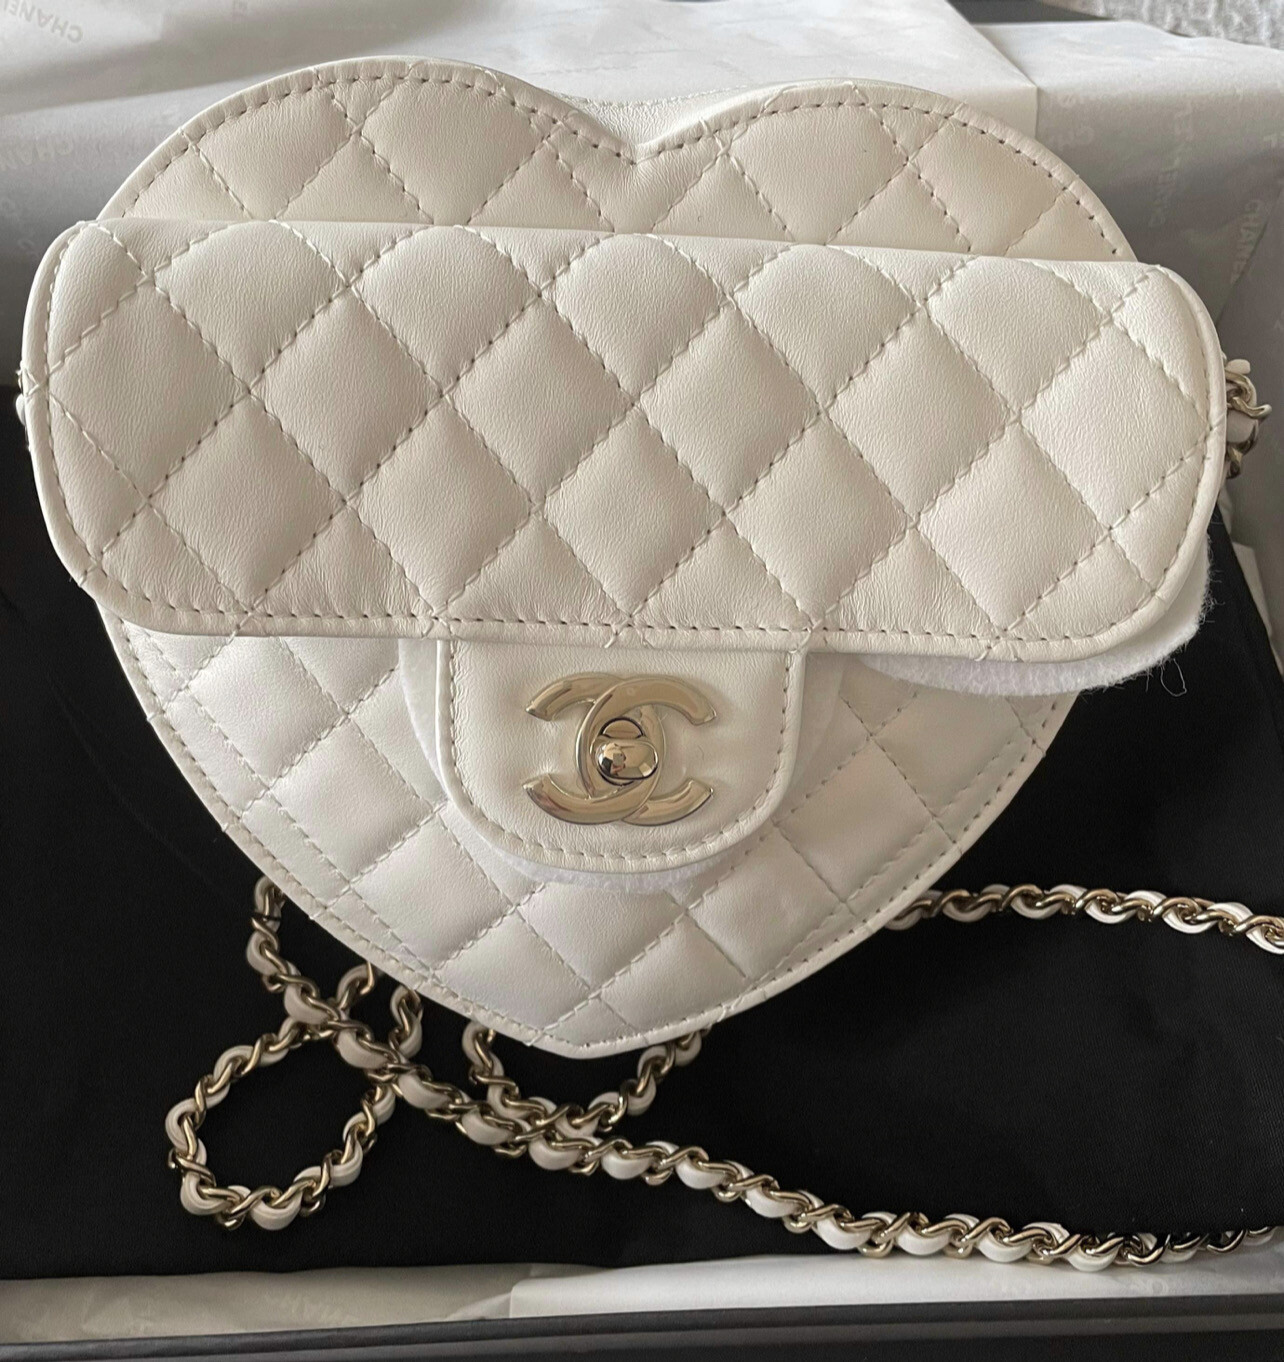 chanel handbags white leather